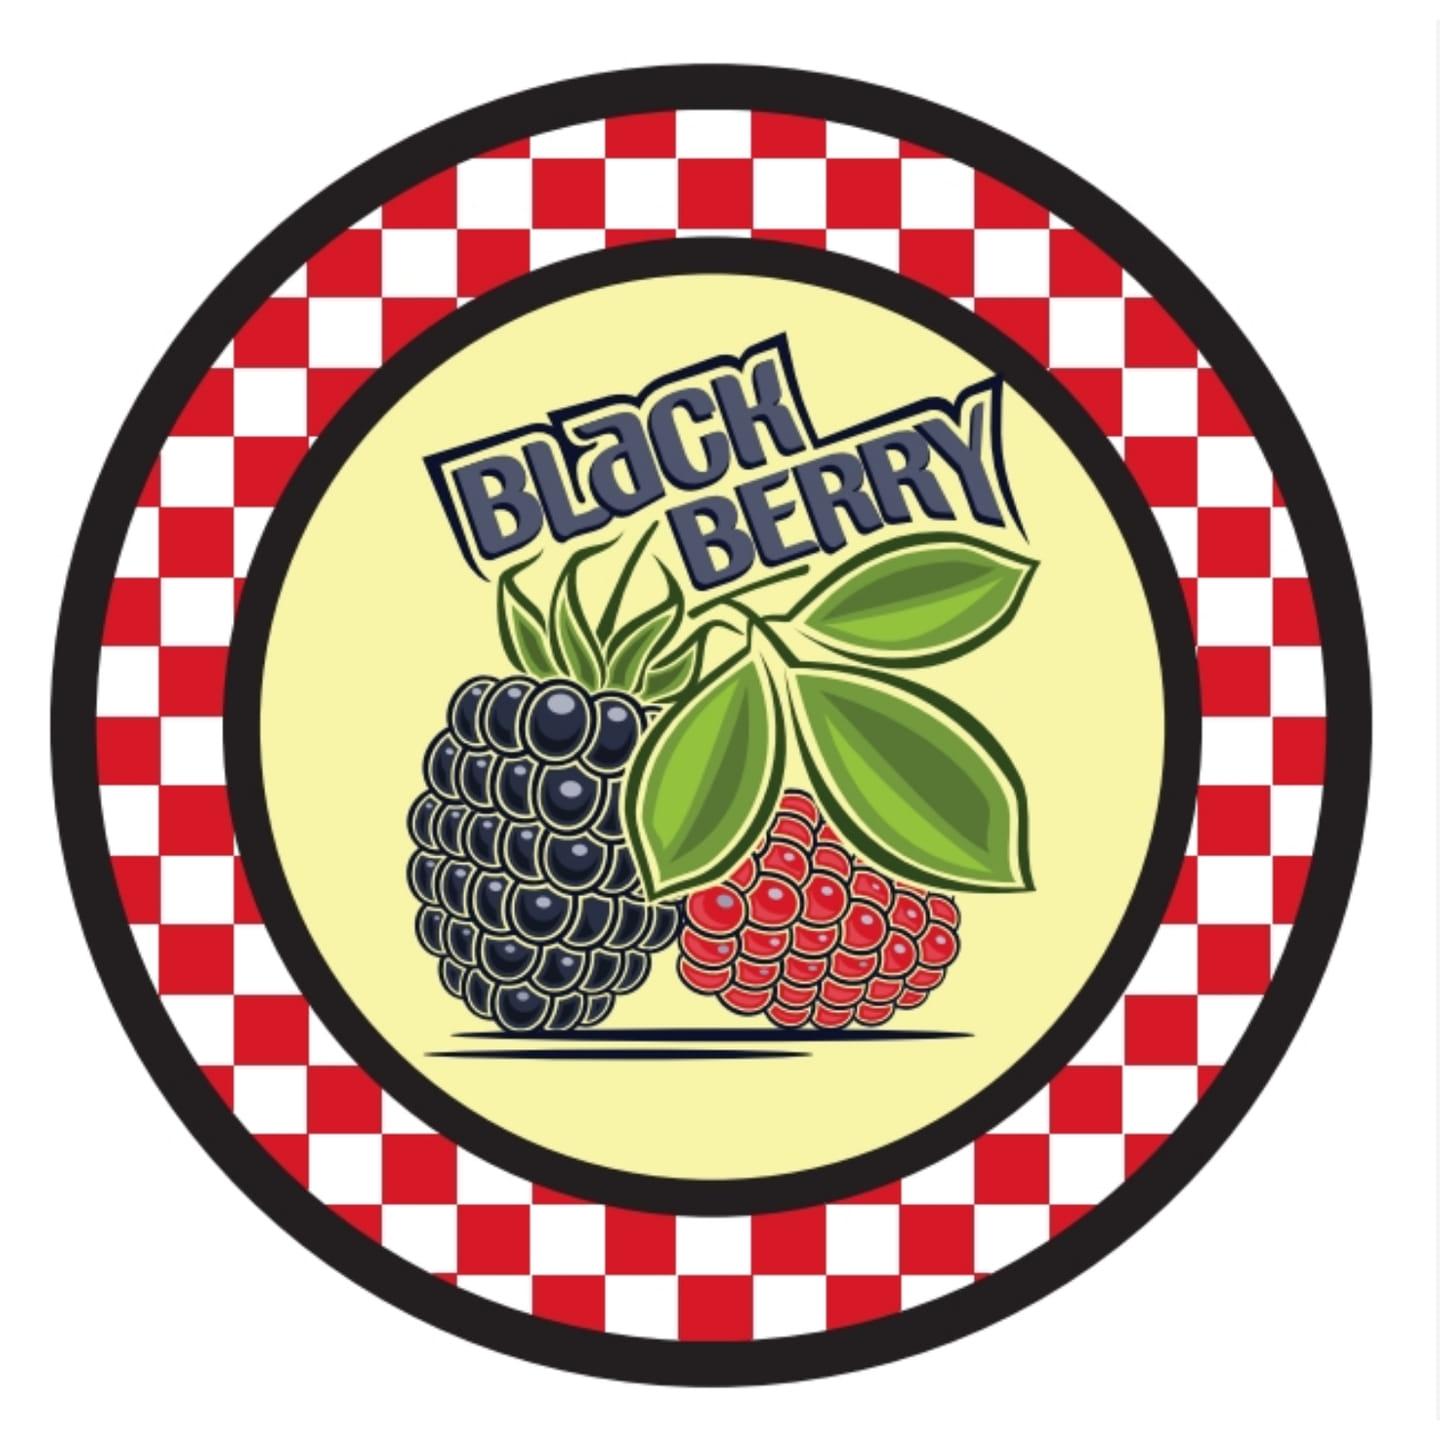 BlackBerry Cafe Gastro Pub logo